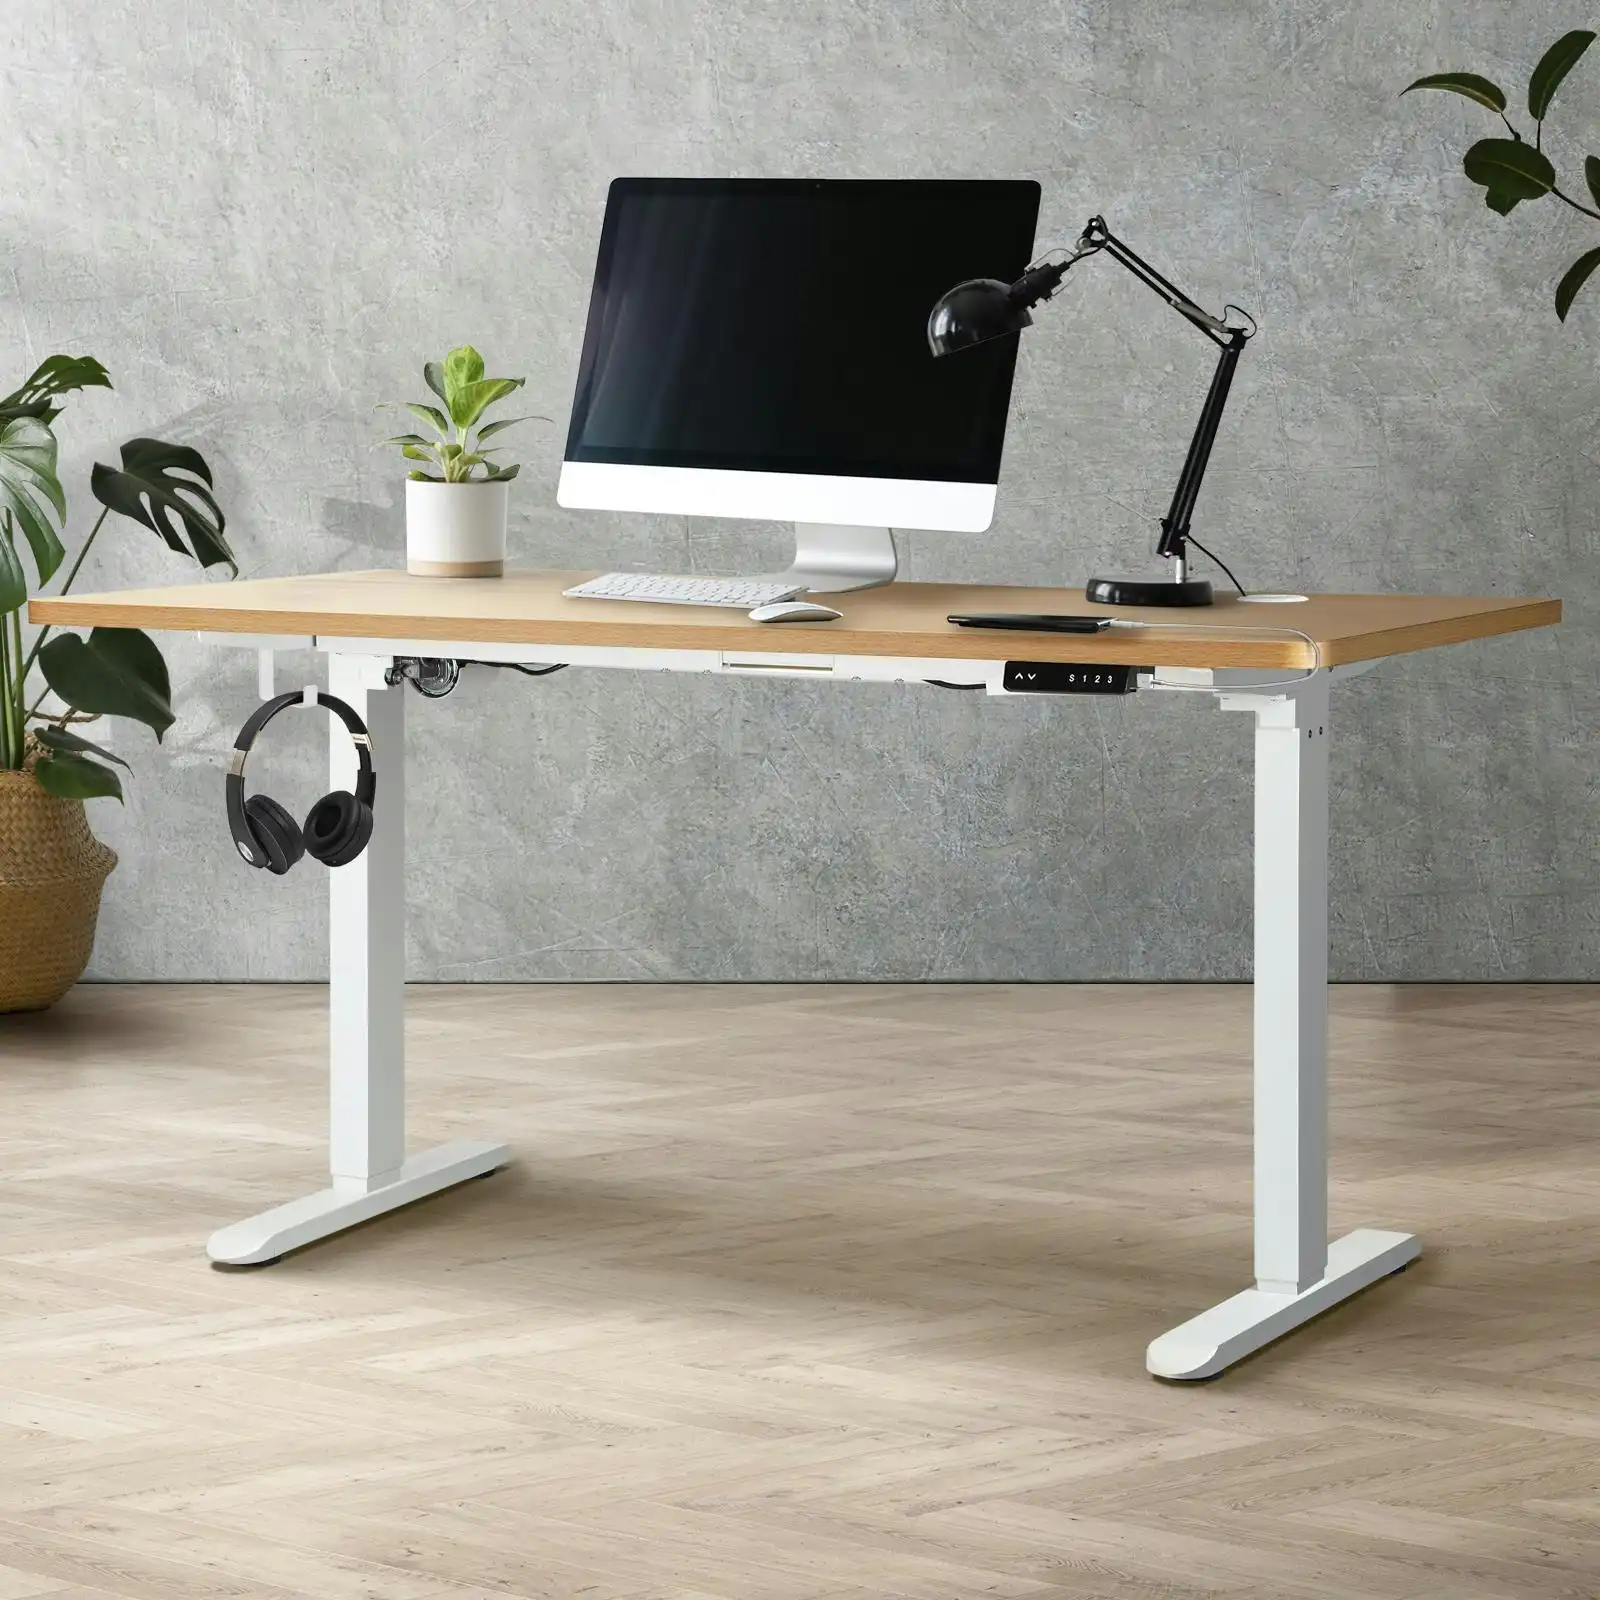 Oikiture 150CM Electric Standing Desk Single Motor White Frame OAK Desktop With USB&Type C Port